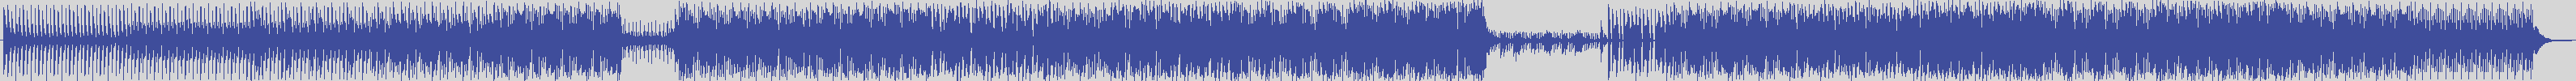 smilax_productions [SPMOL014] Sabe' - Agua Pasada [Acappella] audio wave form